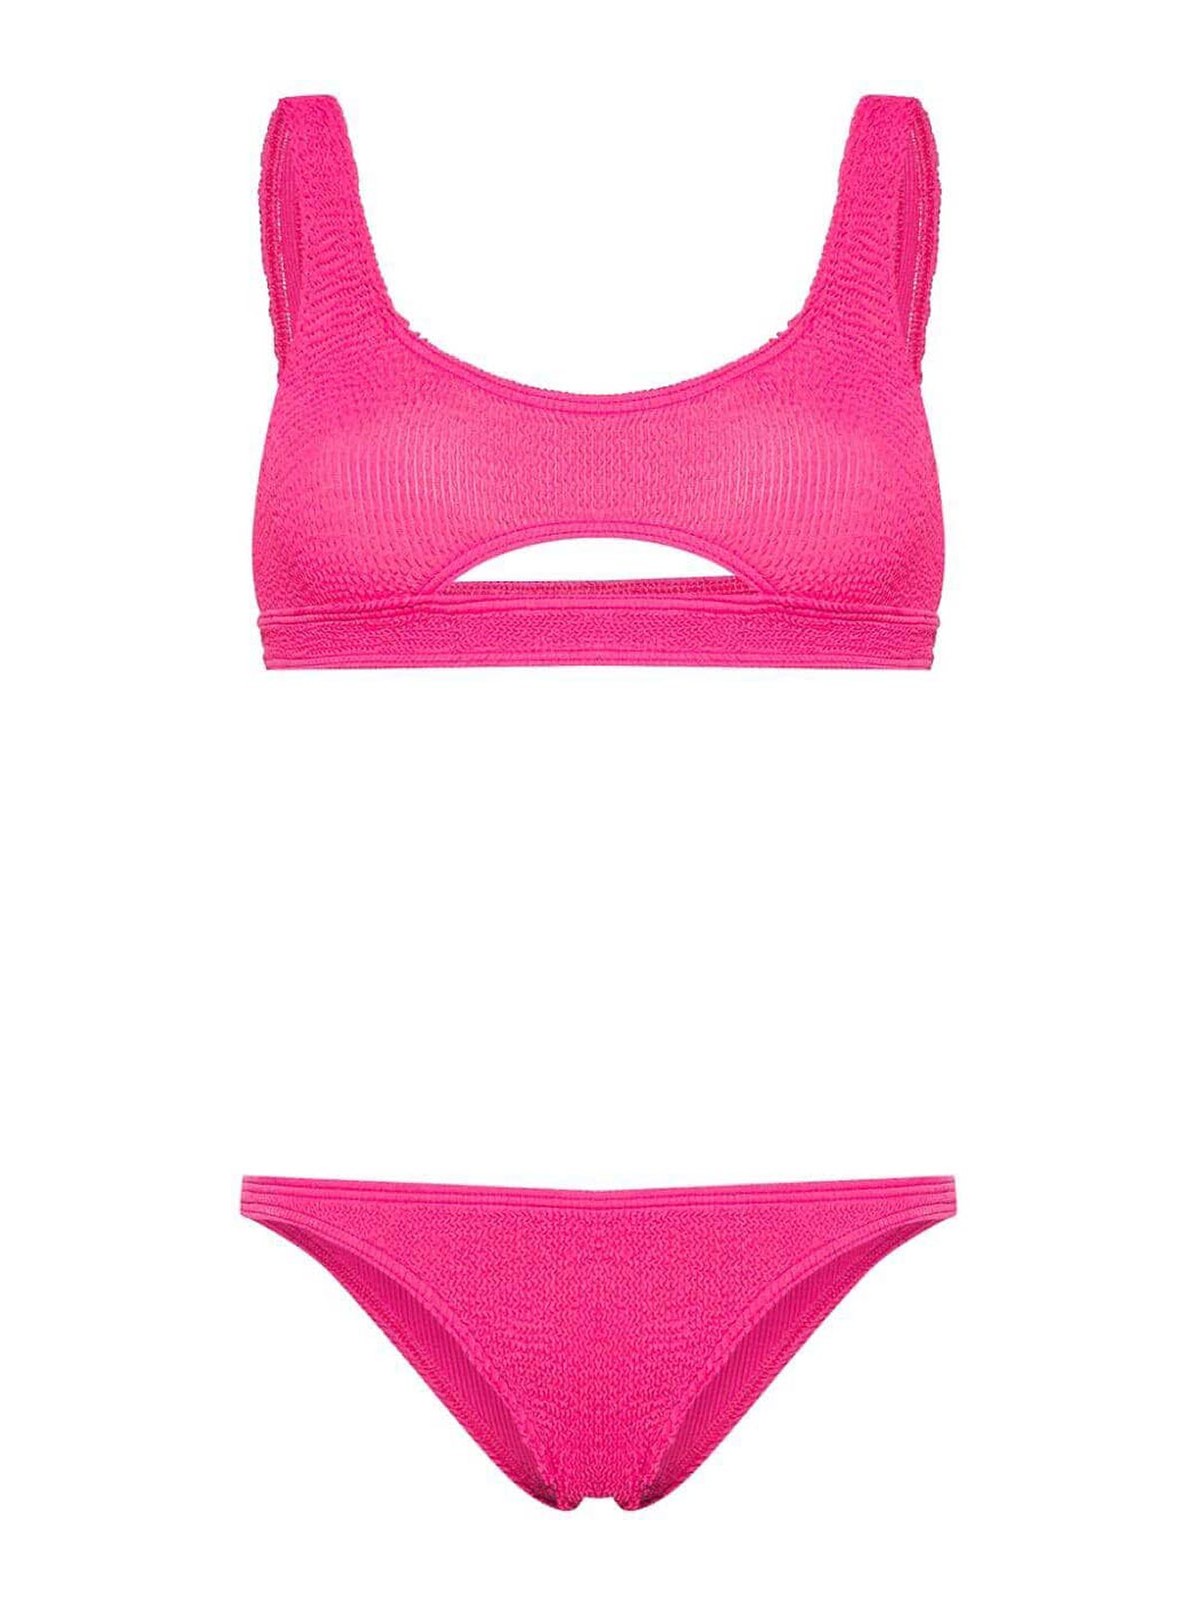 Bondeye Bound Fuchsia Bikini In Pink